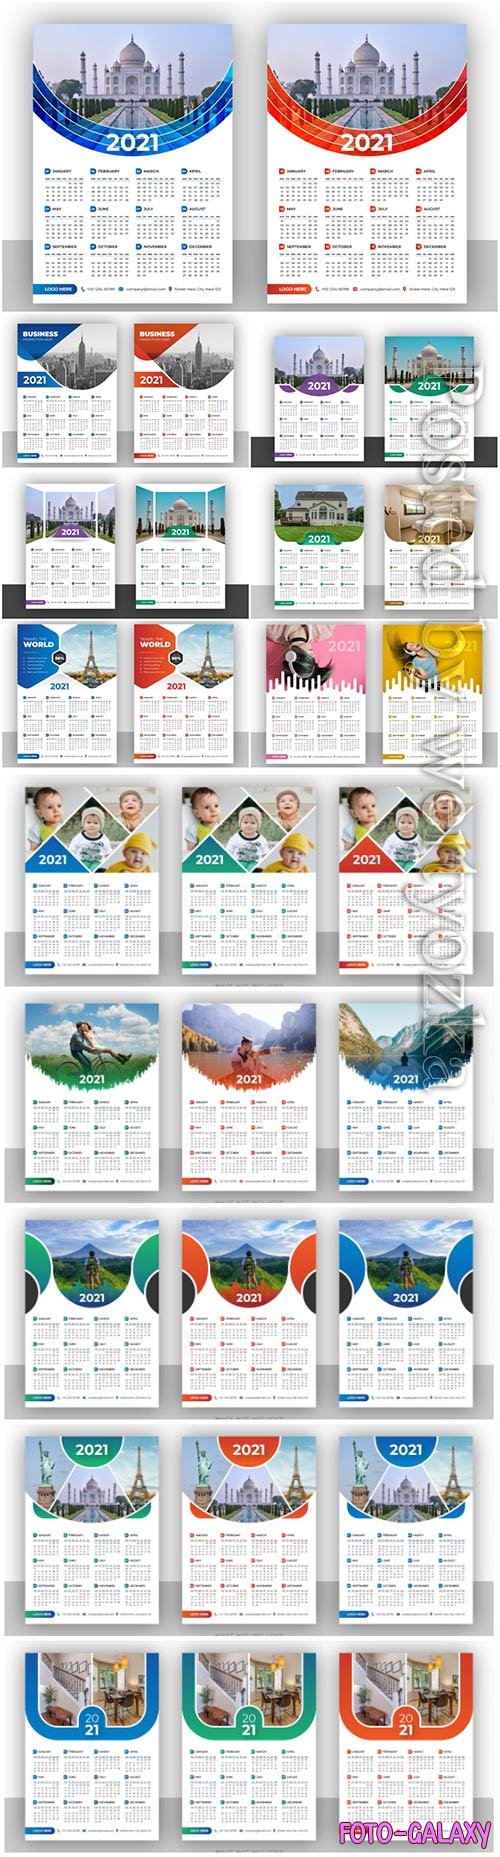 Calendar 2021 design vector template for new year